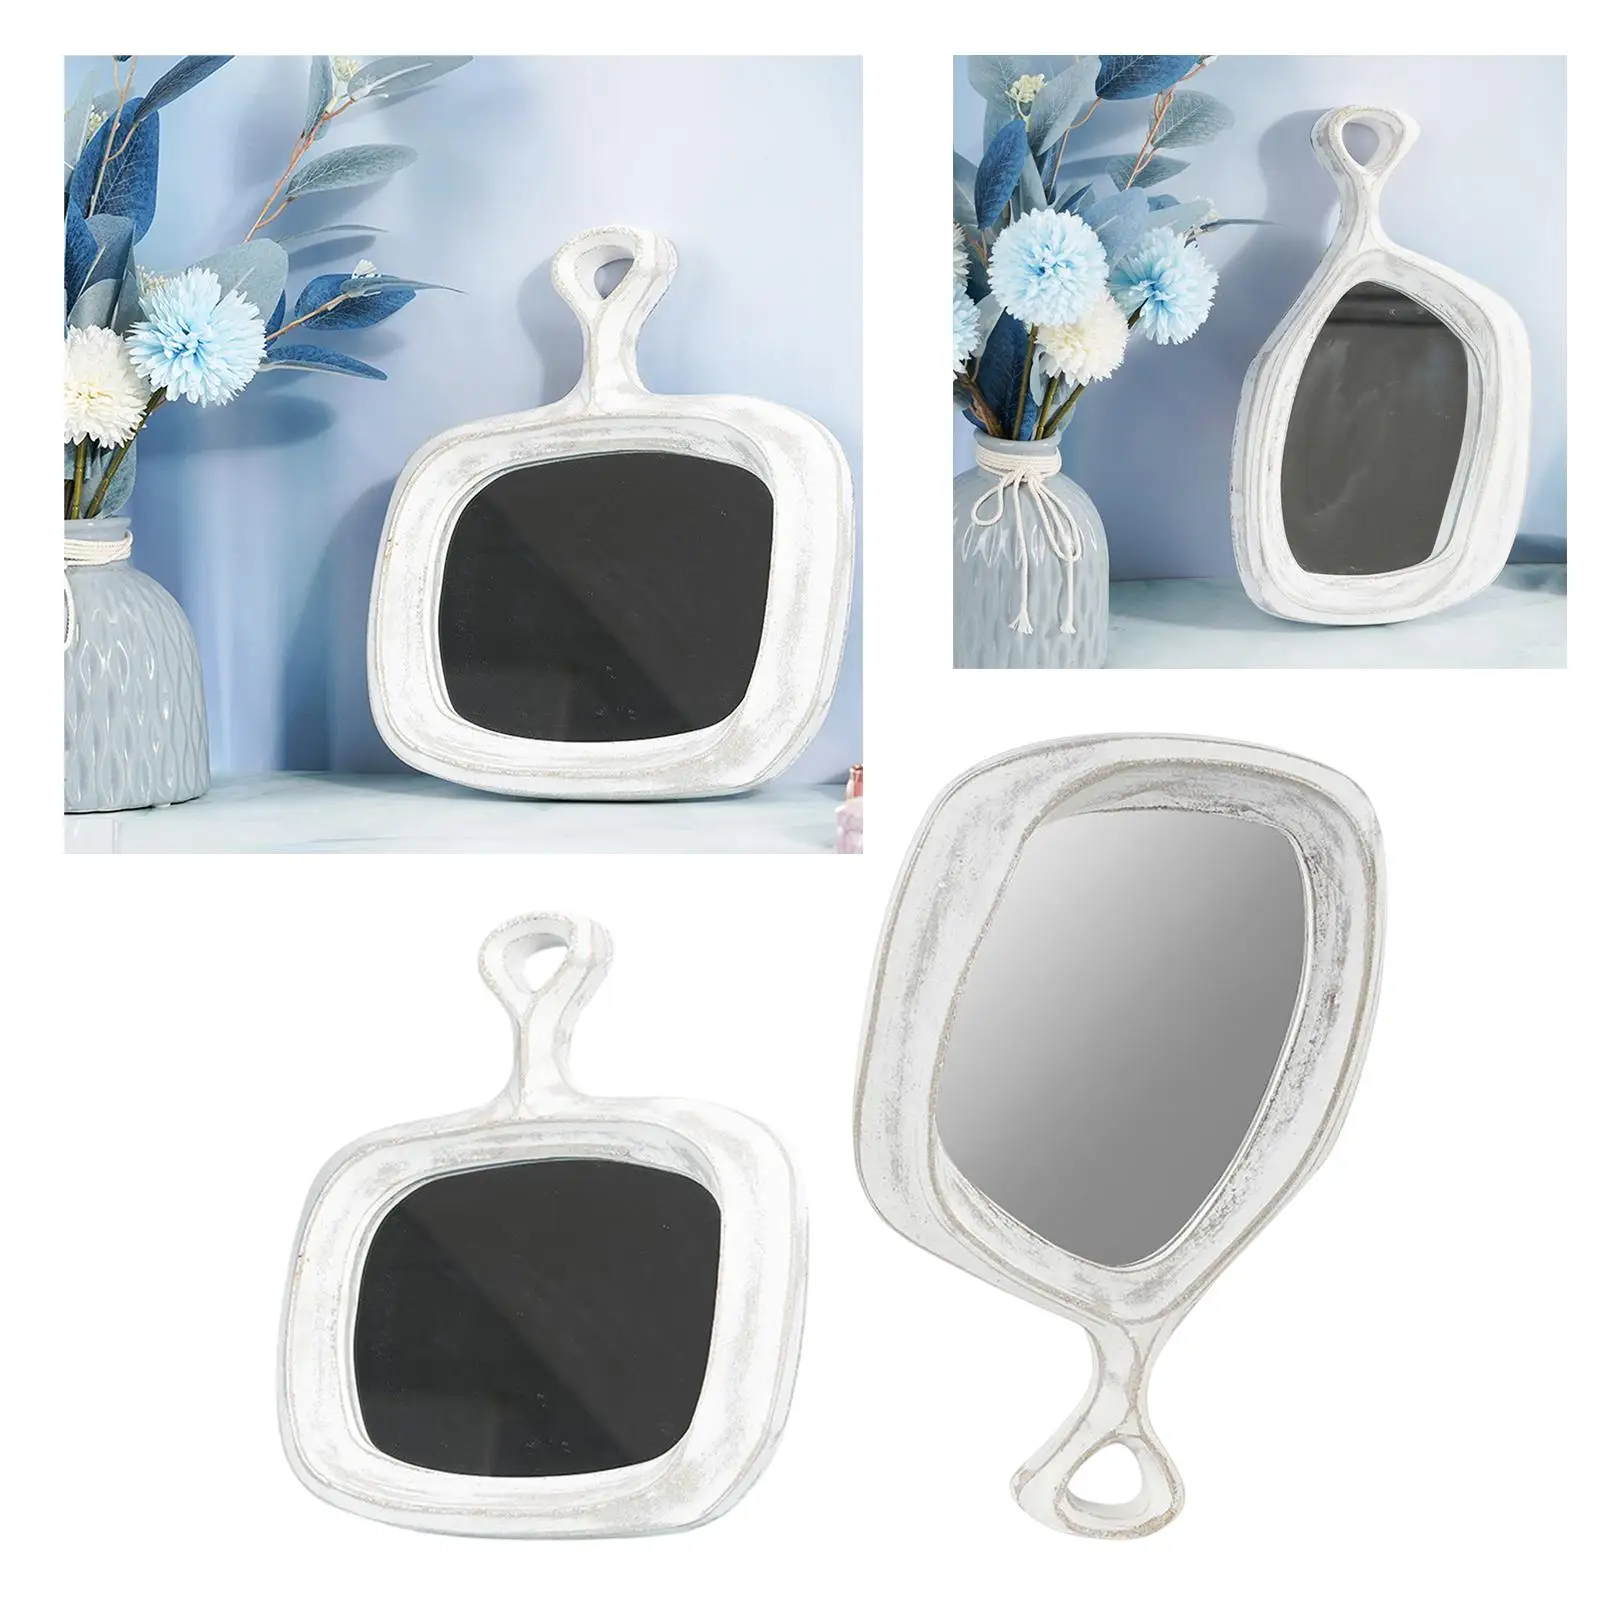 Retro Style Makeup Mirror Cosmetic Mirror Decorative Tabletop Mirror for Dressing Table Countertop Living Room Shaving Entryway